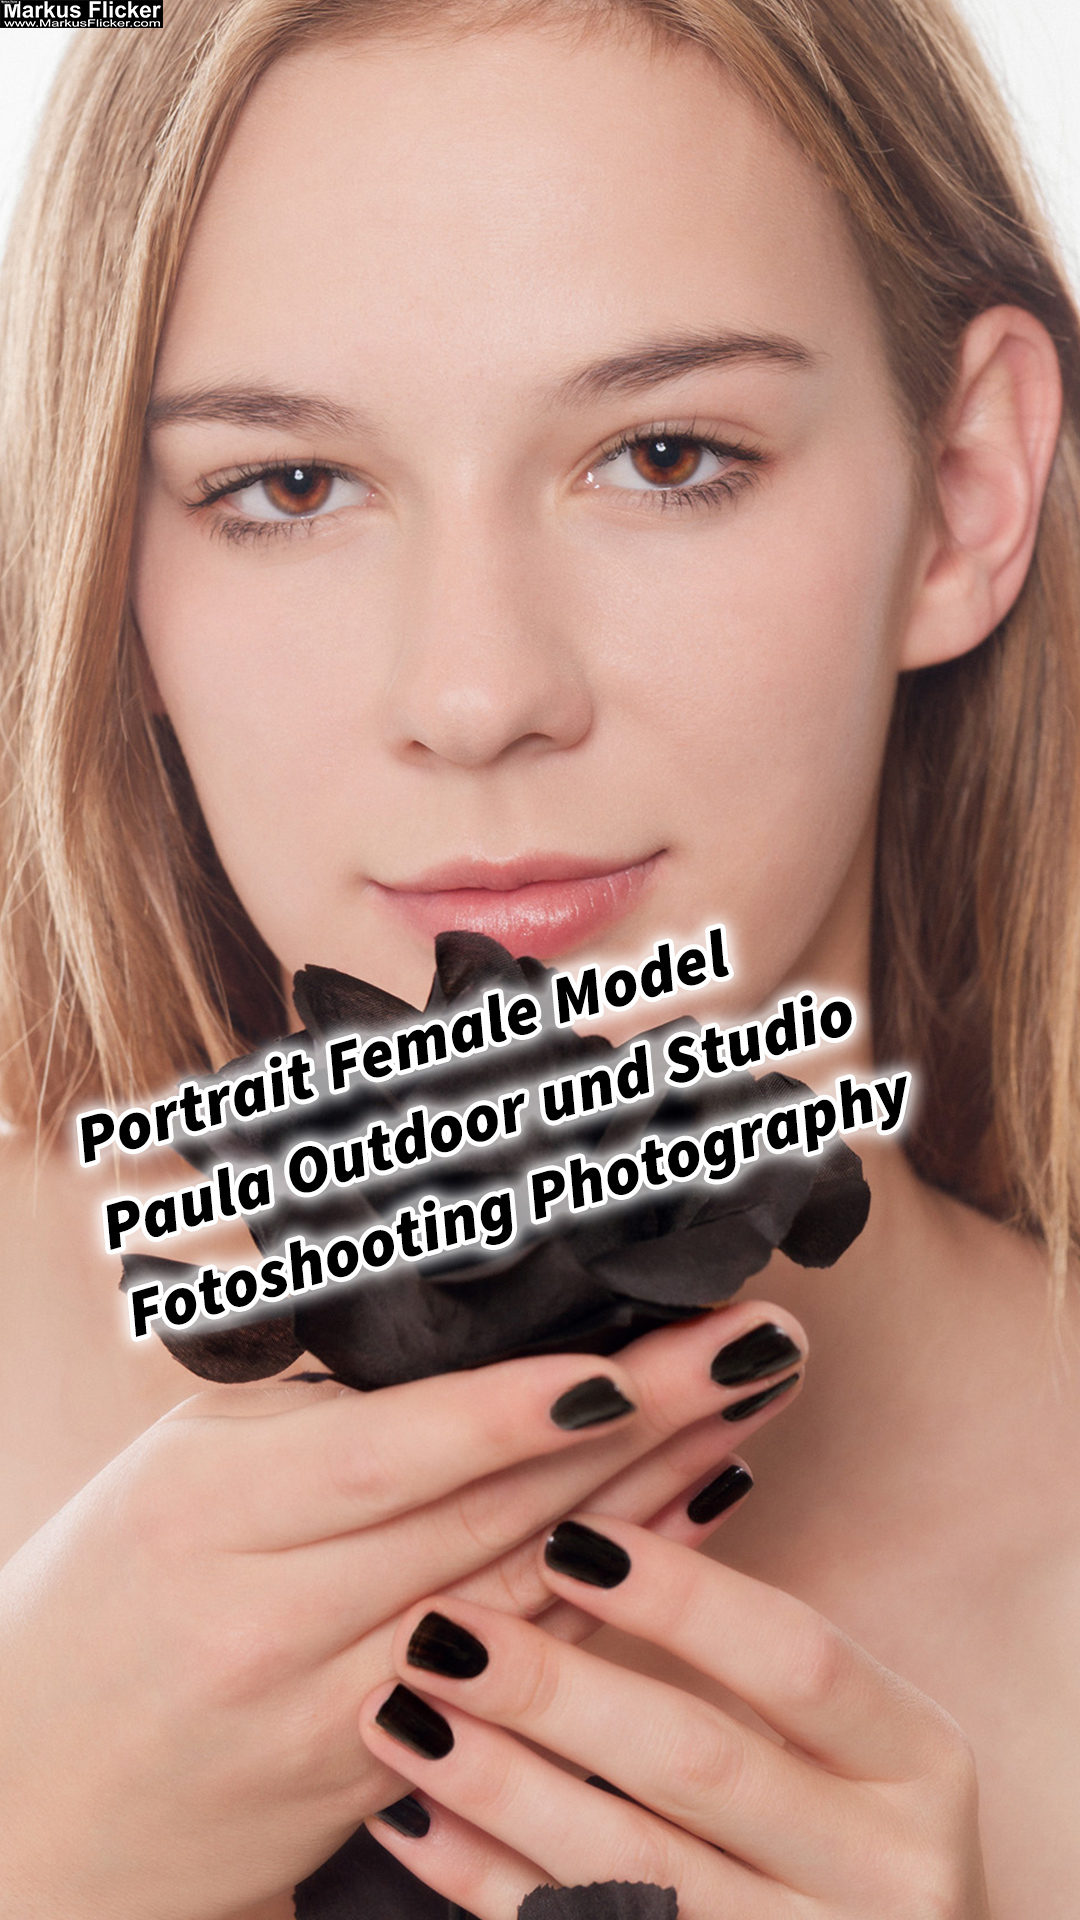 Portrait Female Model Paula Outdoor und Studio Fotoshooting Photography